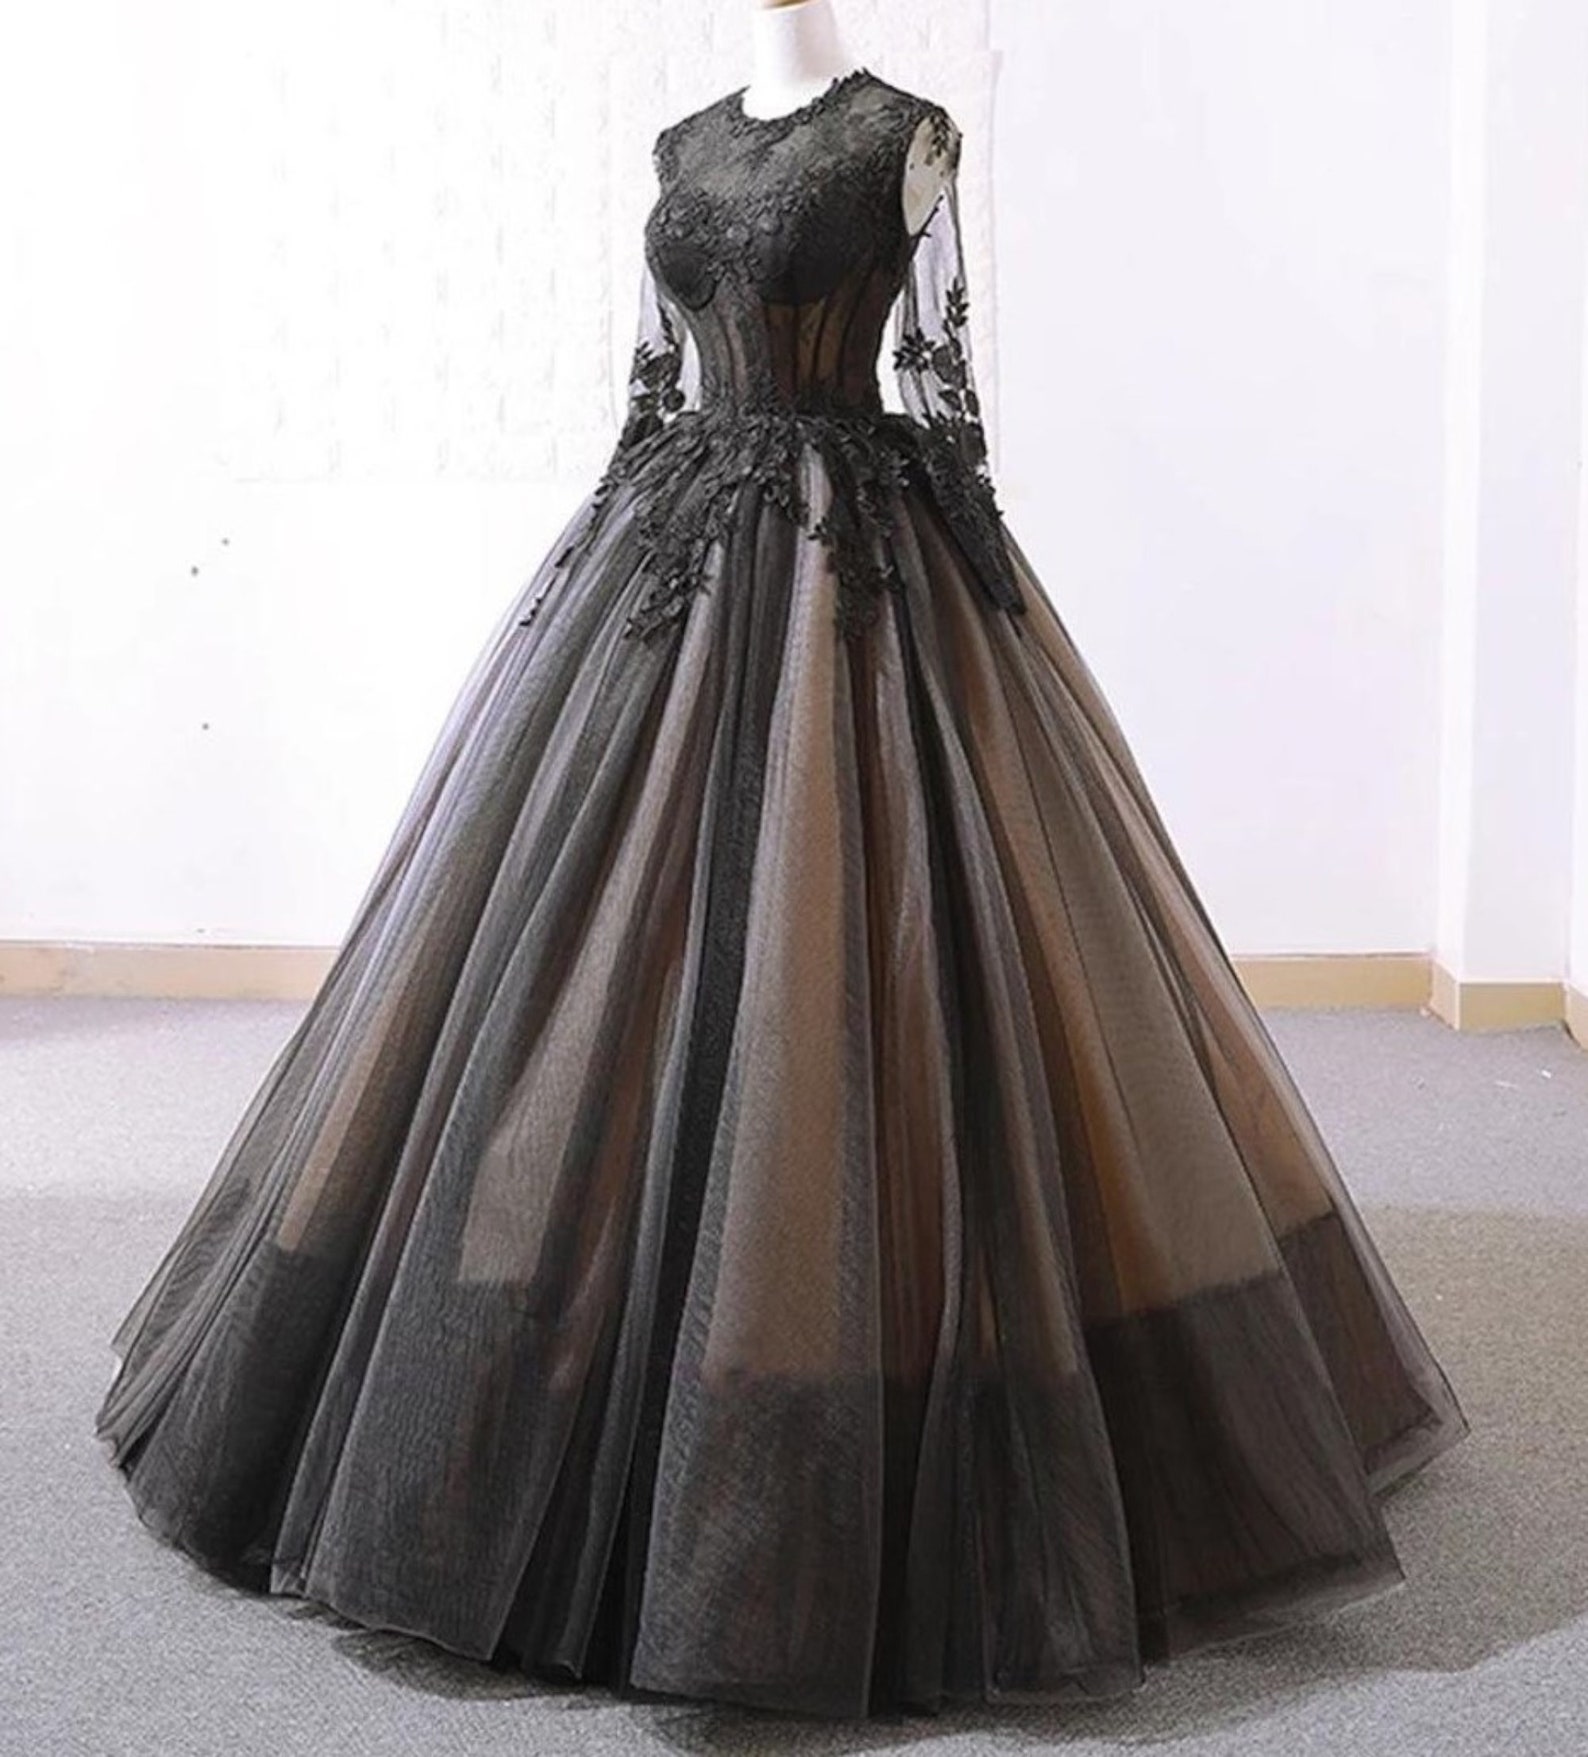 Black Victorian Gothic Modest Wedding Dress or Alternative - Etsy